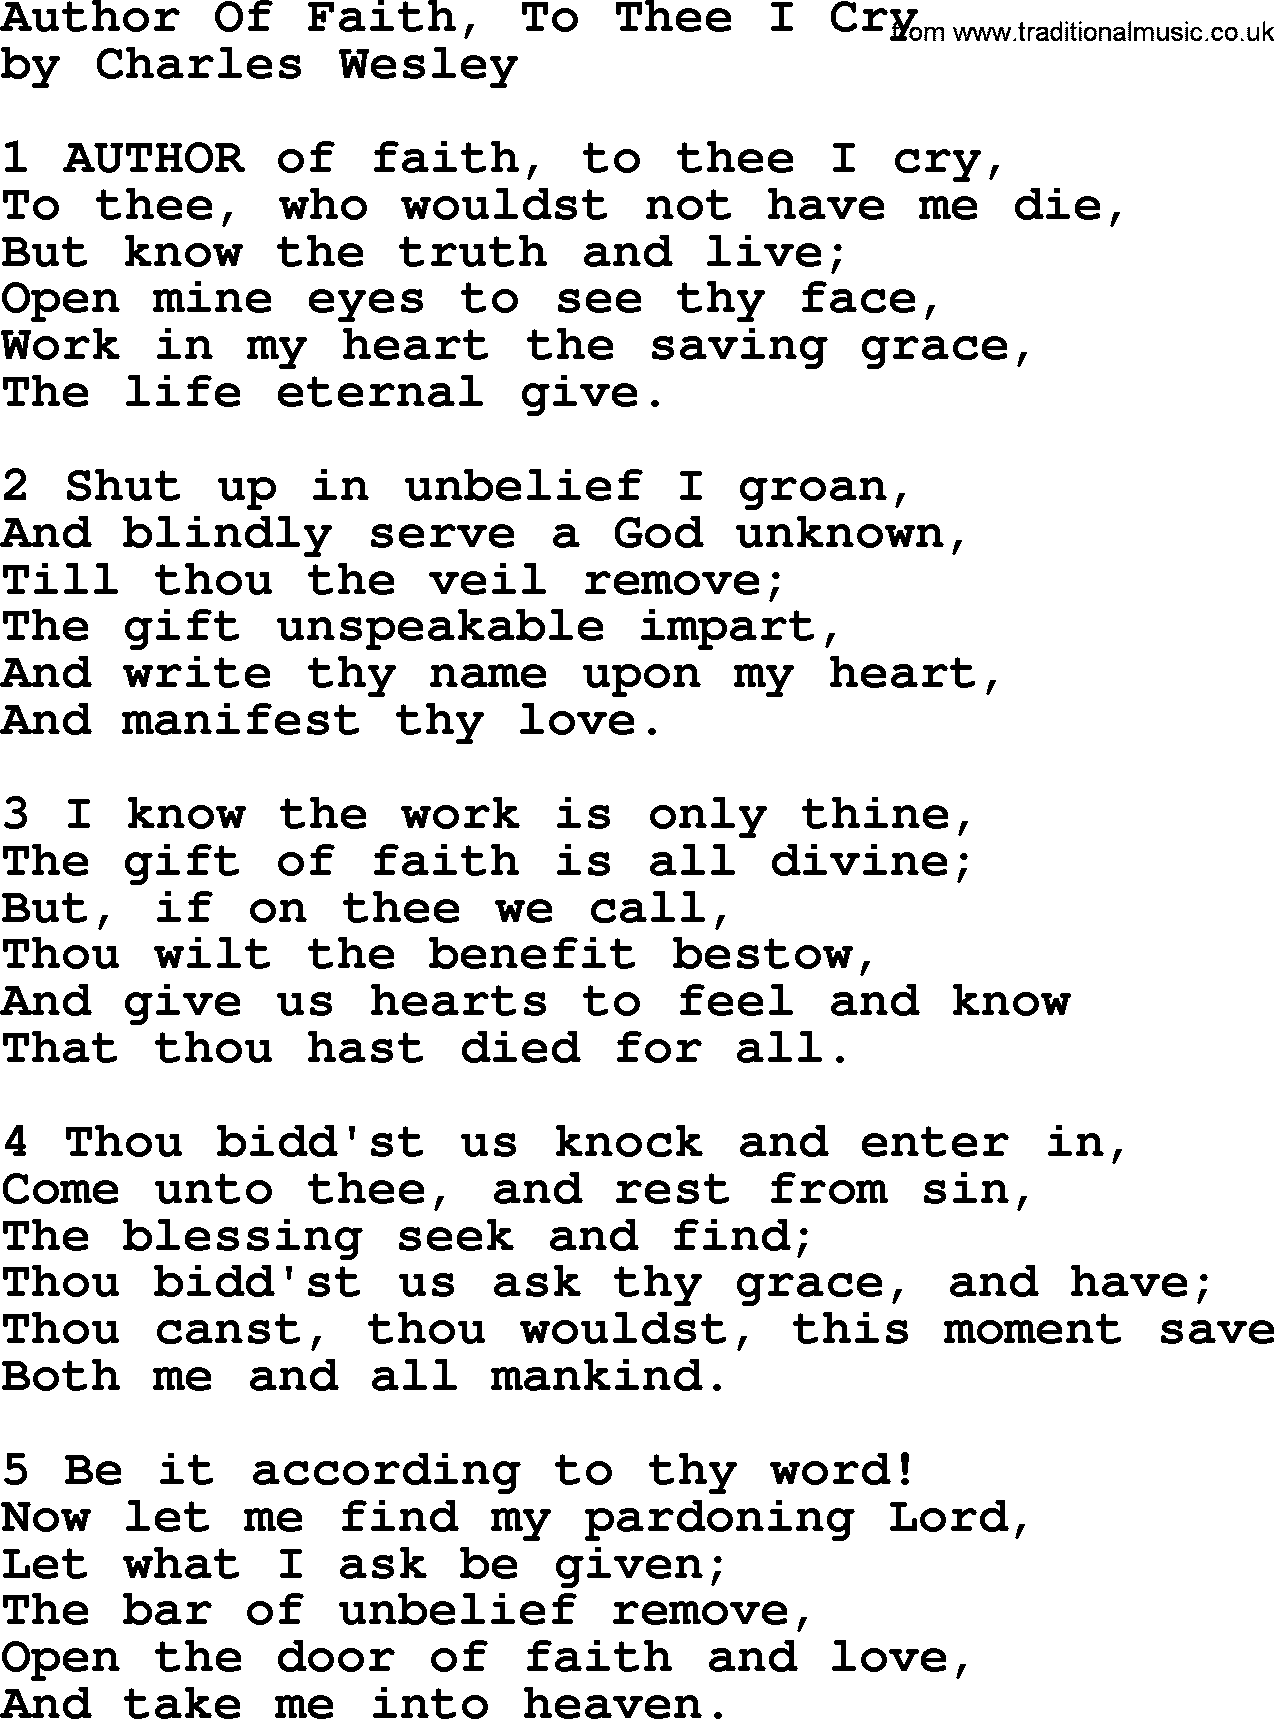 Charles Wesley hymn: Author Of Faith, To Thee I Cry, lyrics